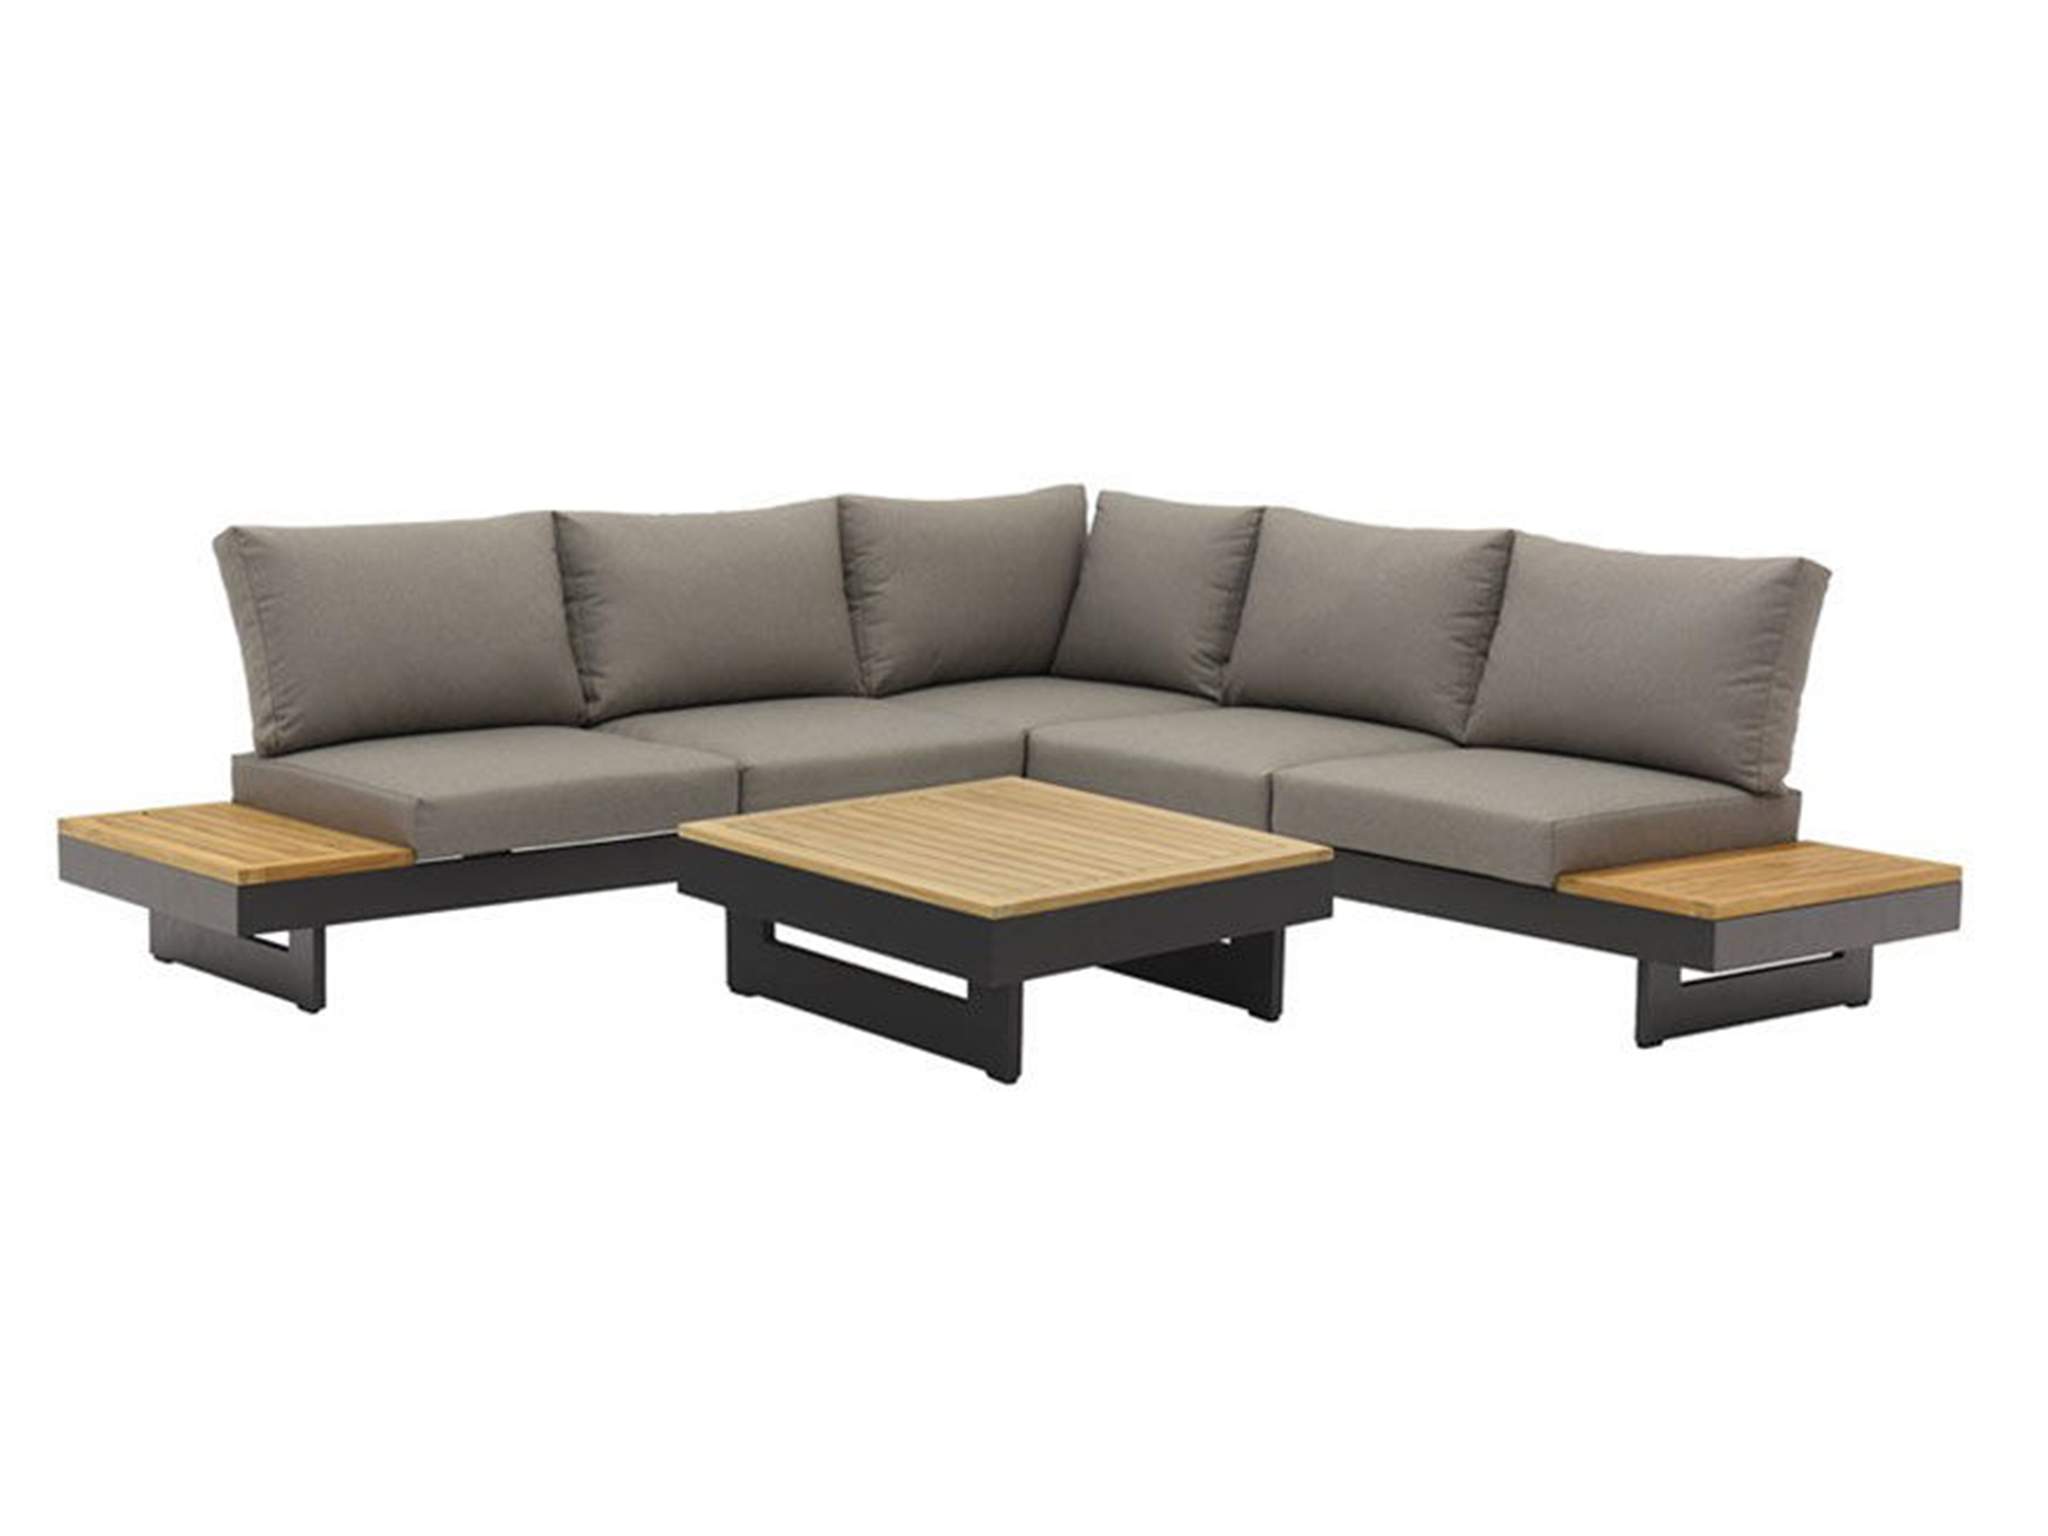  Bramblecrest vilamoura modular corner sofa with square teak coffee table